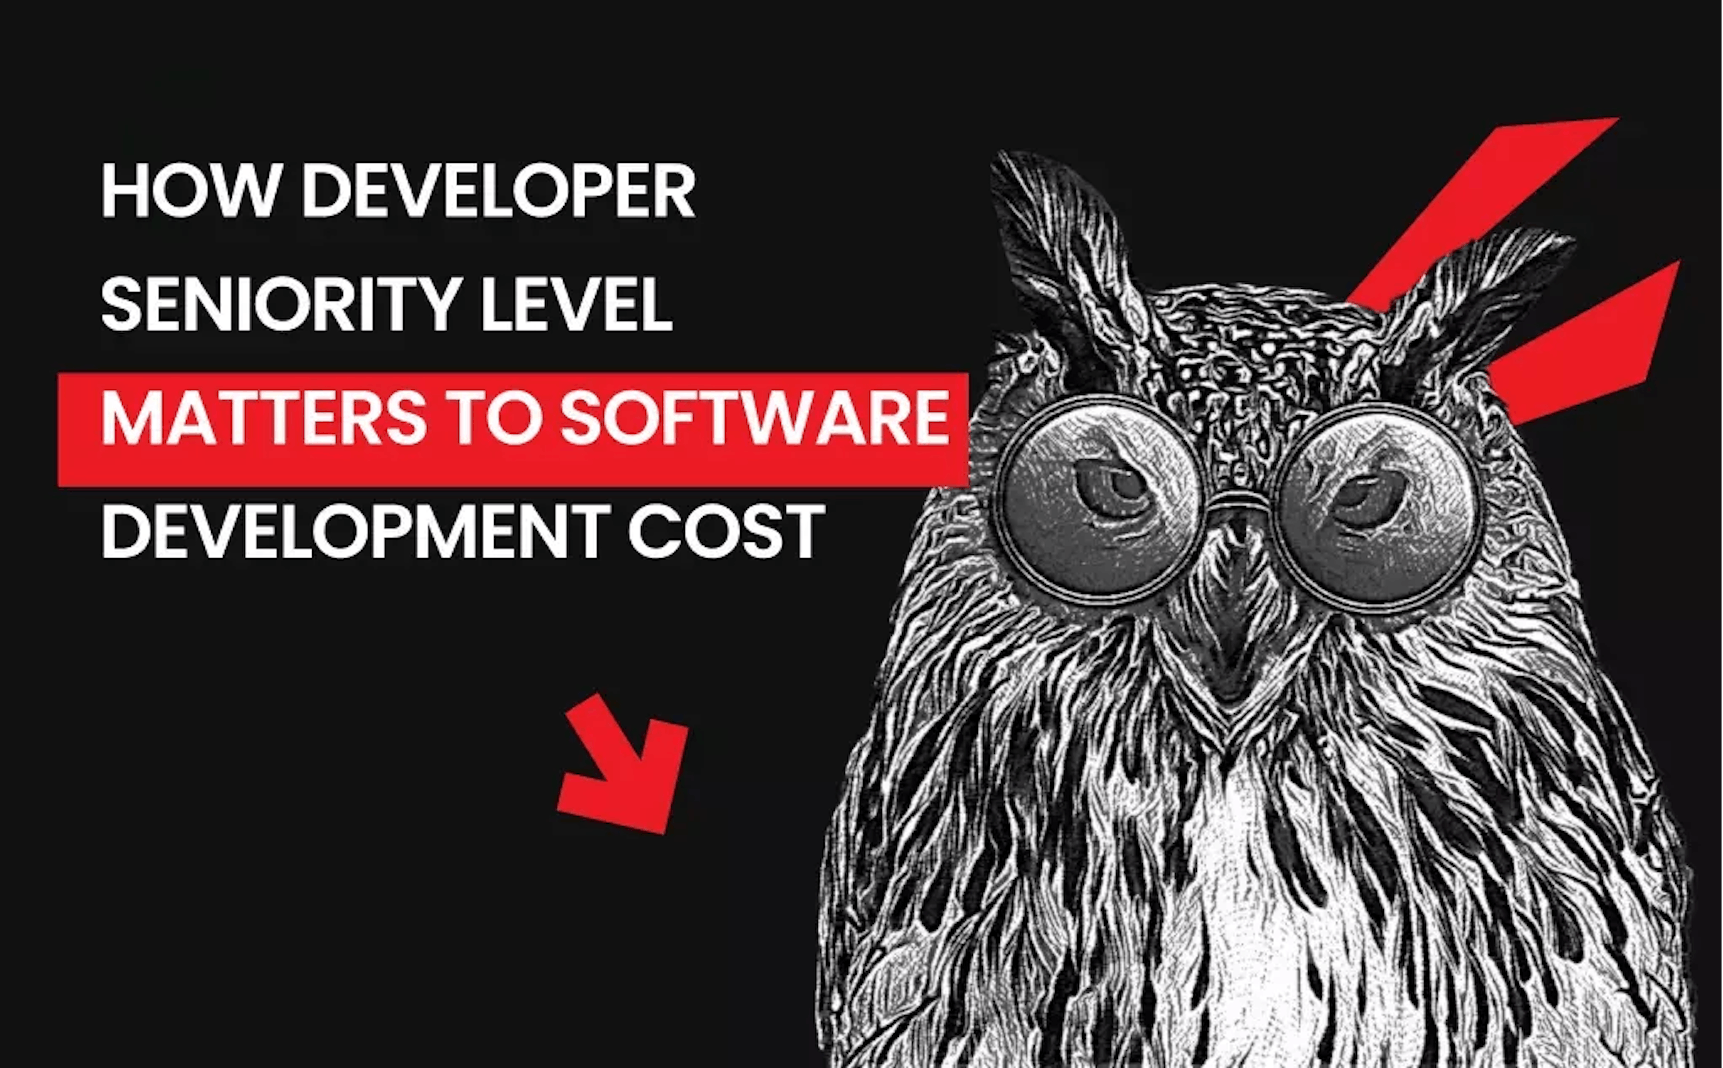 3. How Developer Seniority Level Matters to Software Development Cost